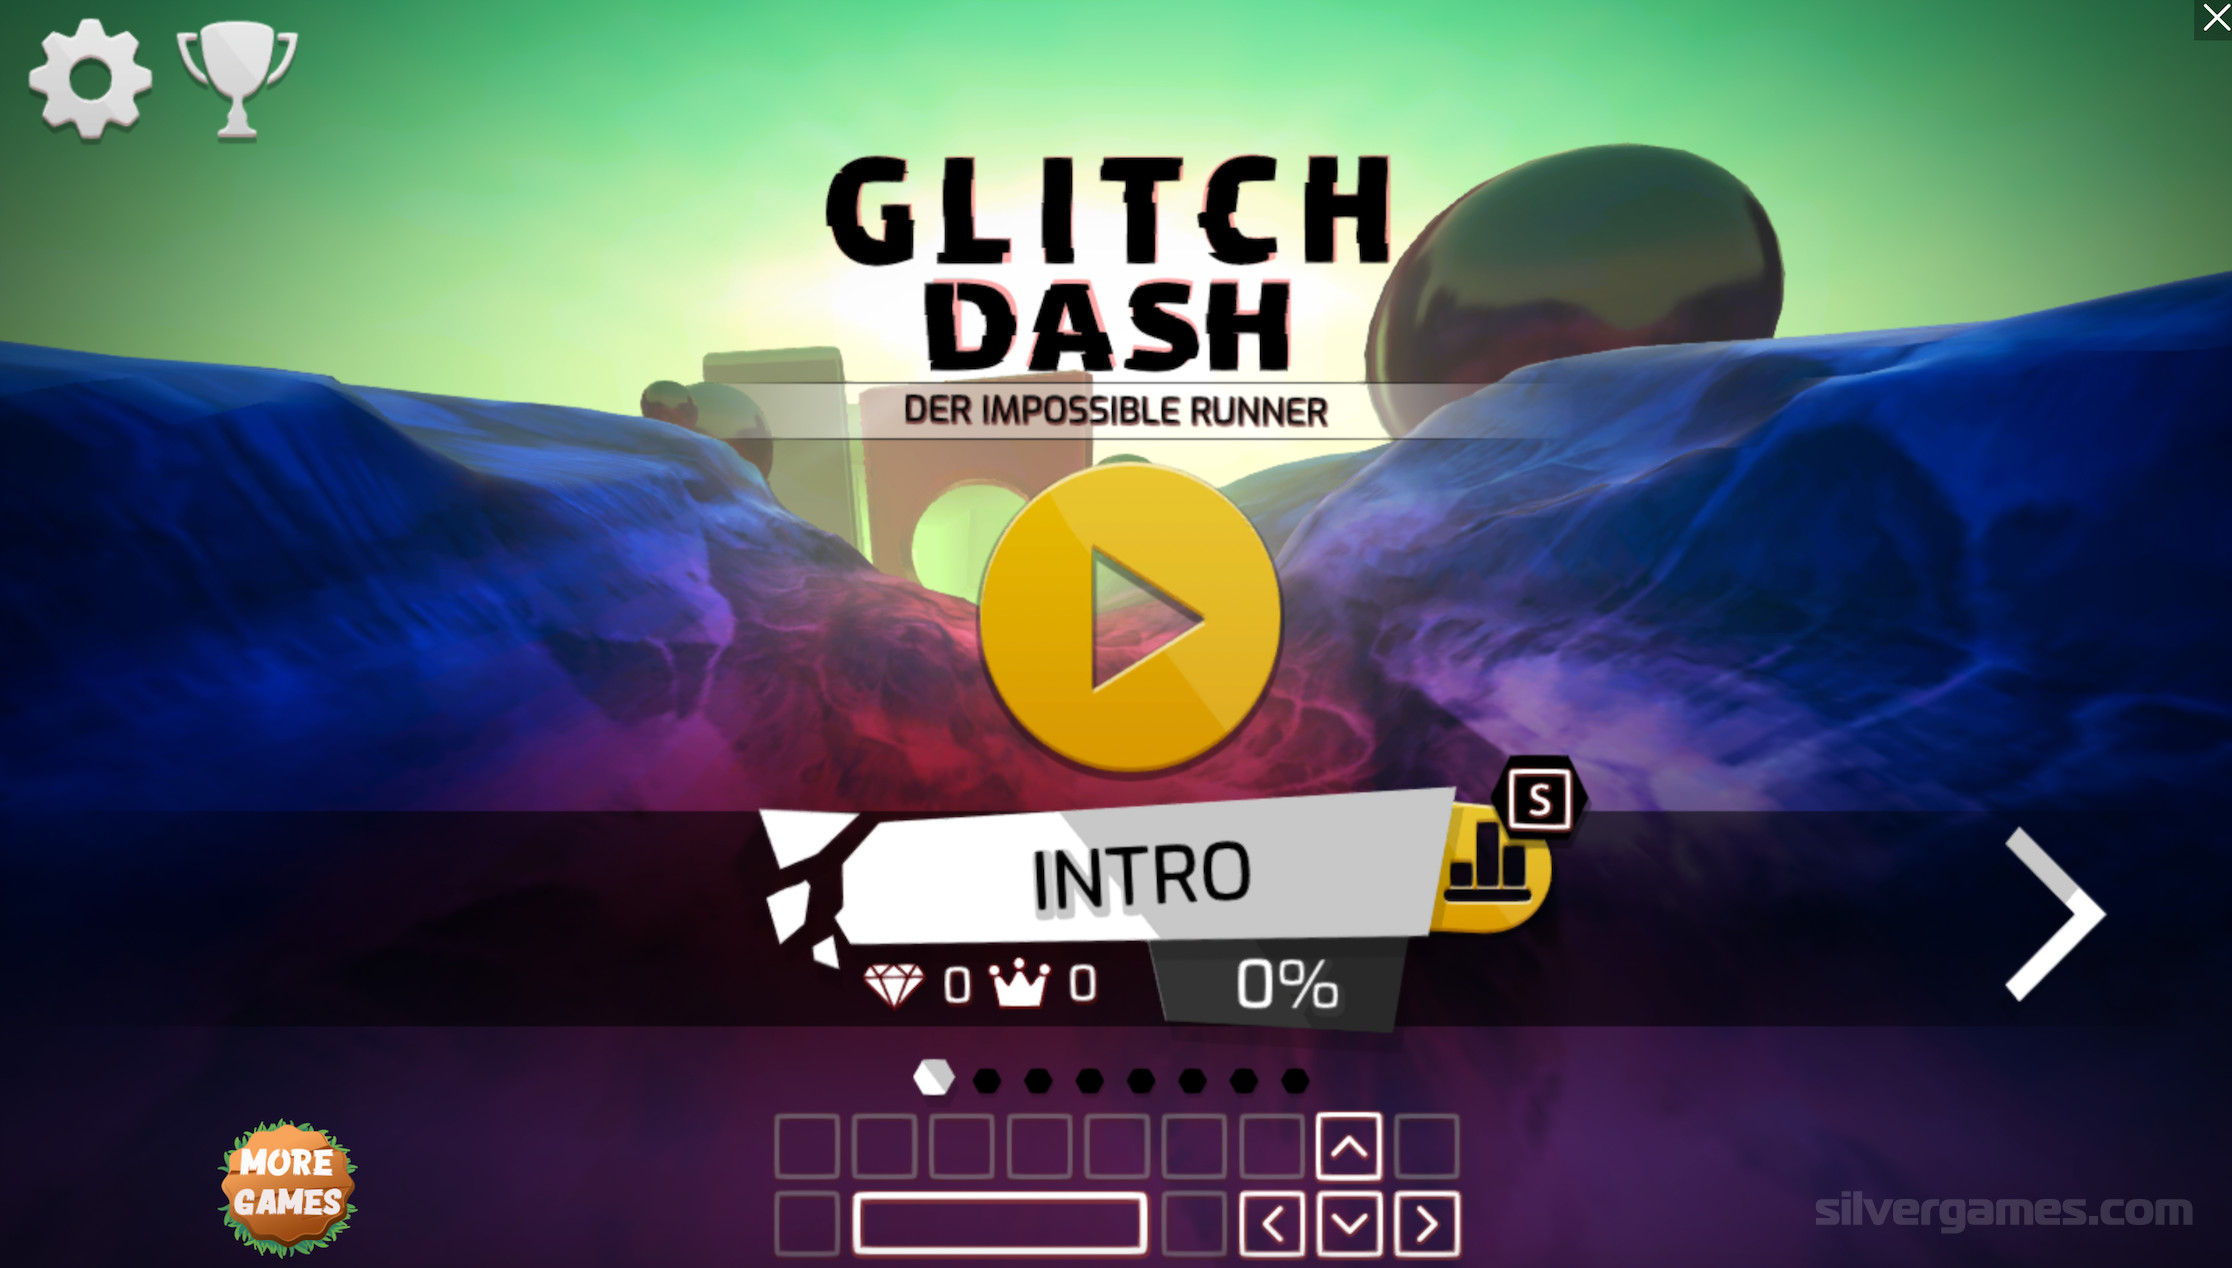 GLITCH DASH - Play Online for Free!